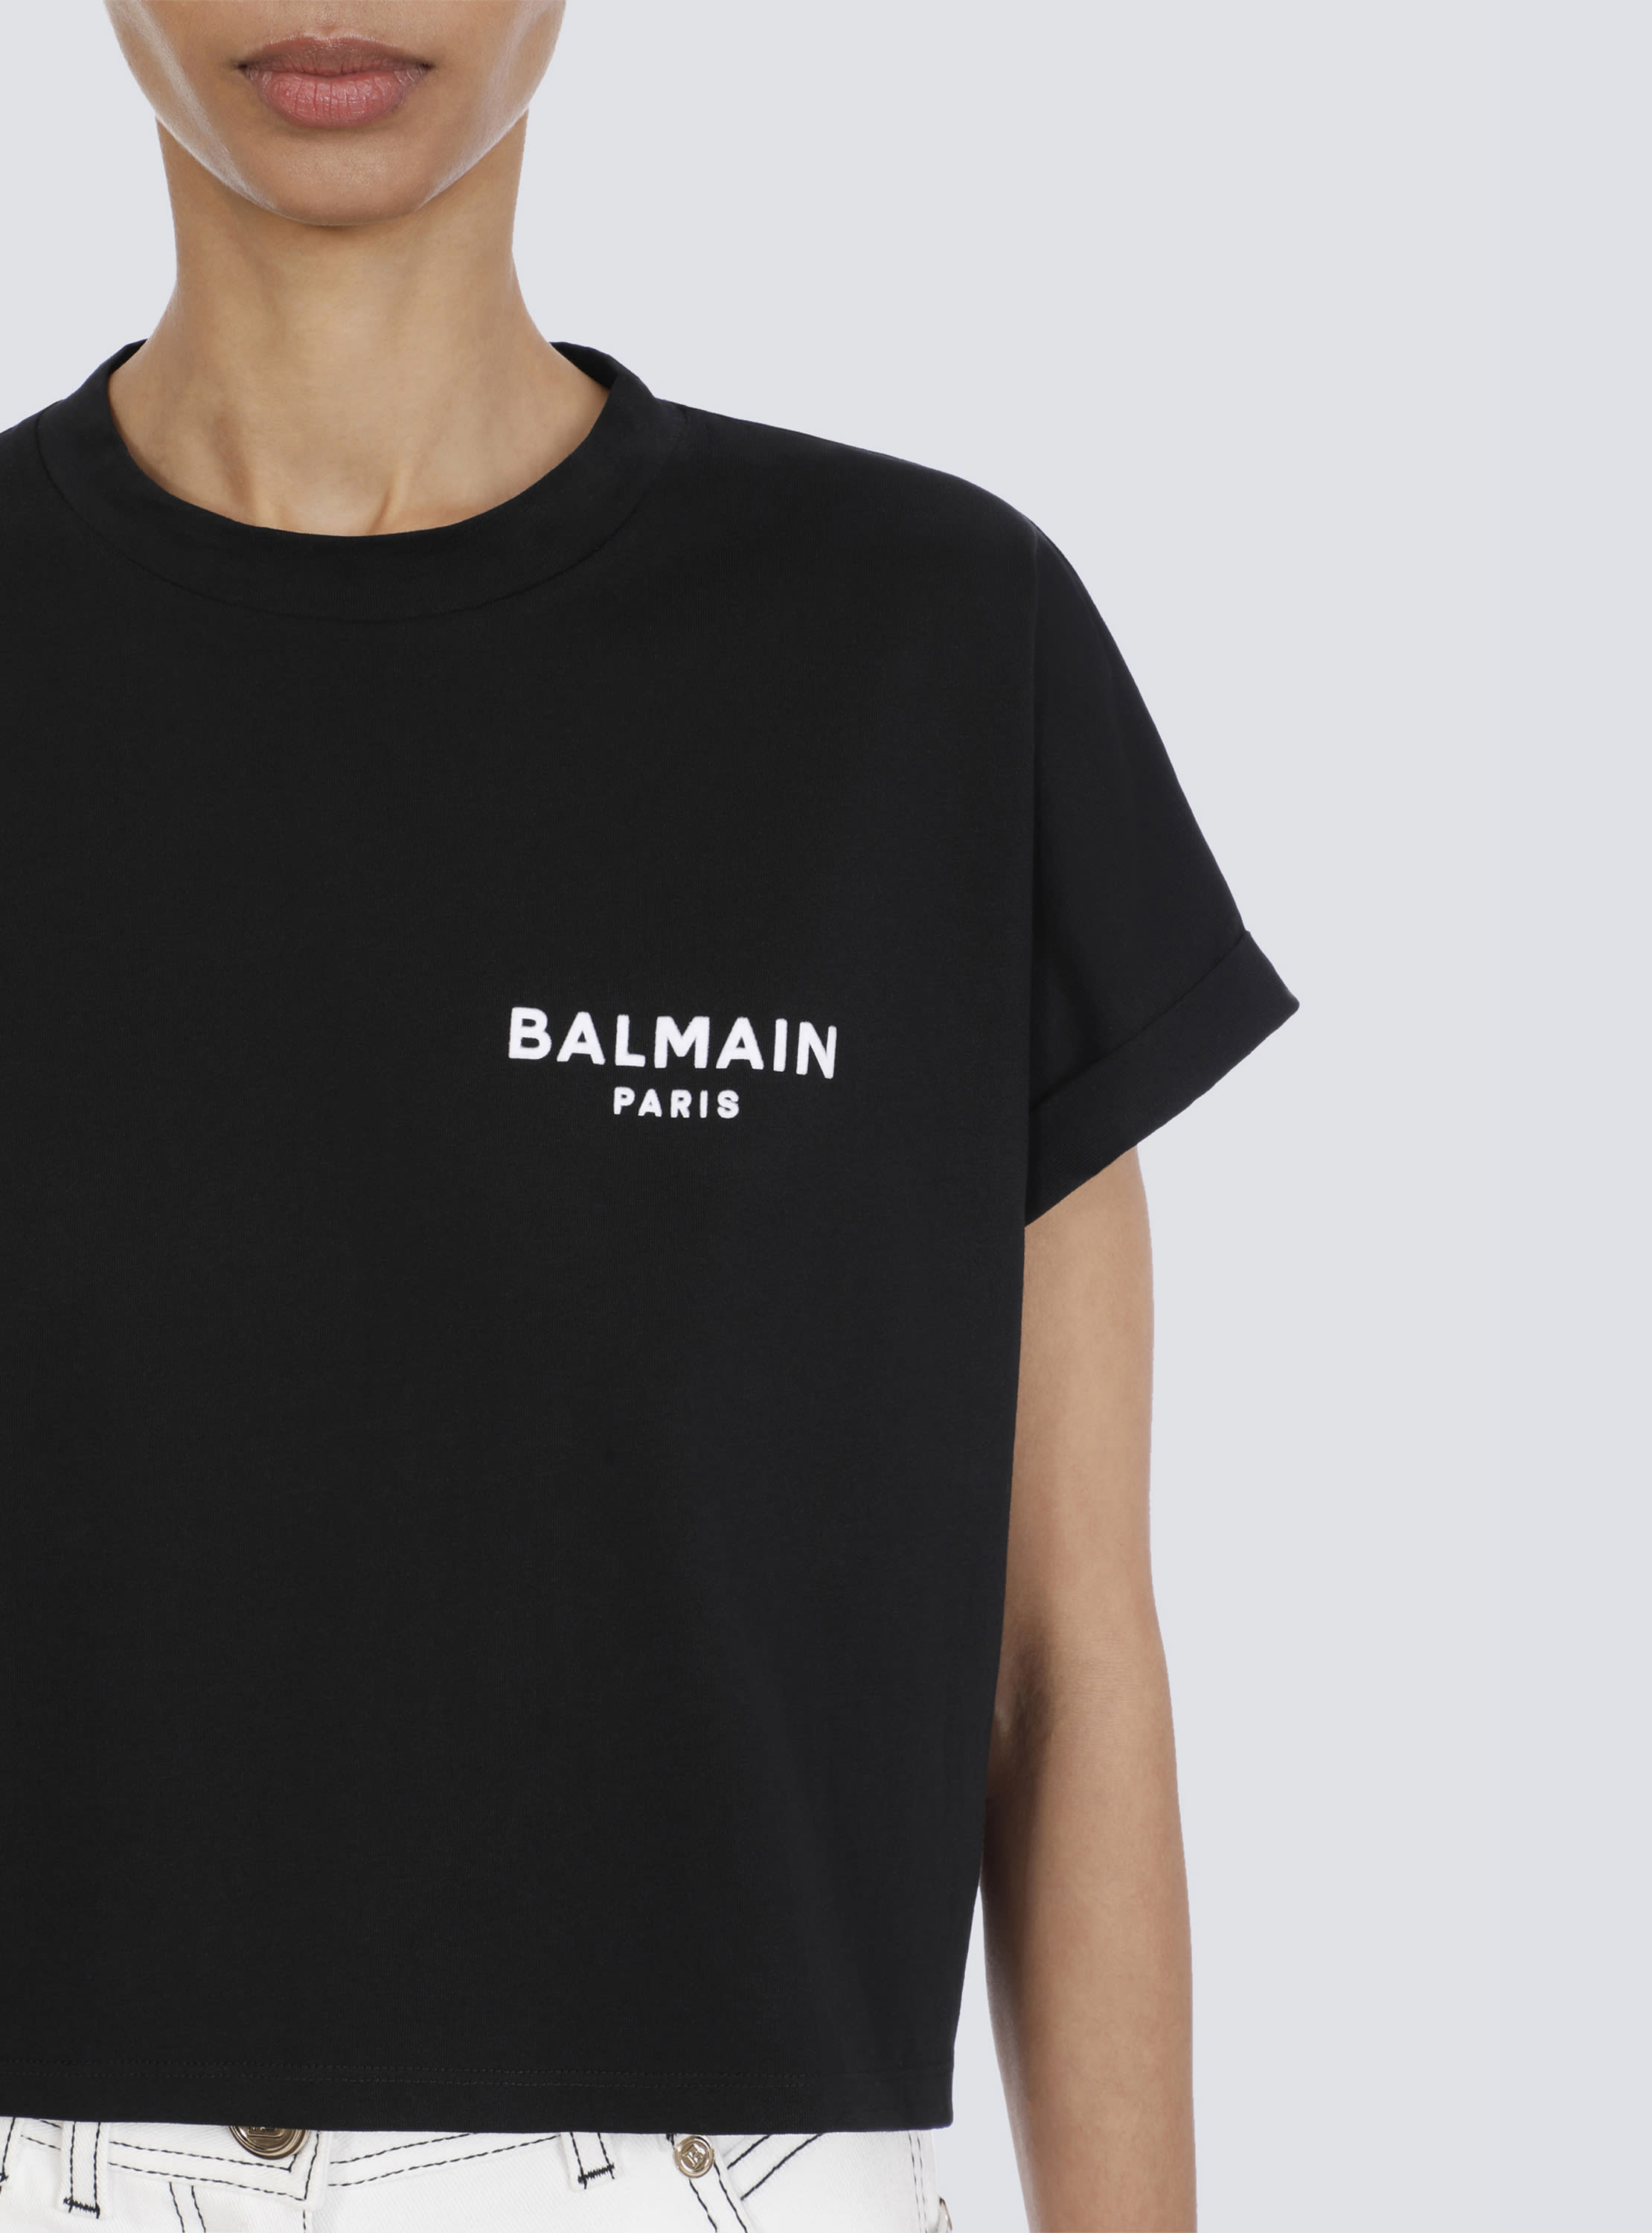 Camiseta corta de algodón con logotipo pequeño de Balmain flocado